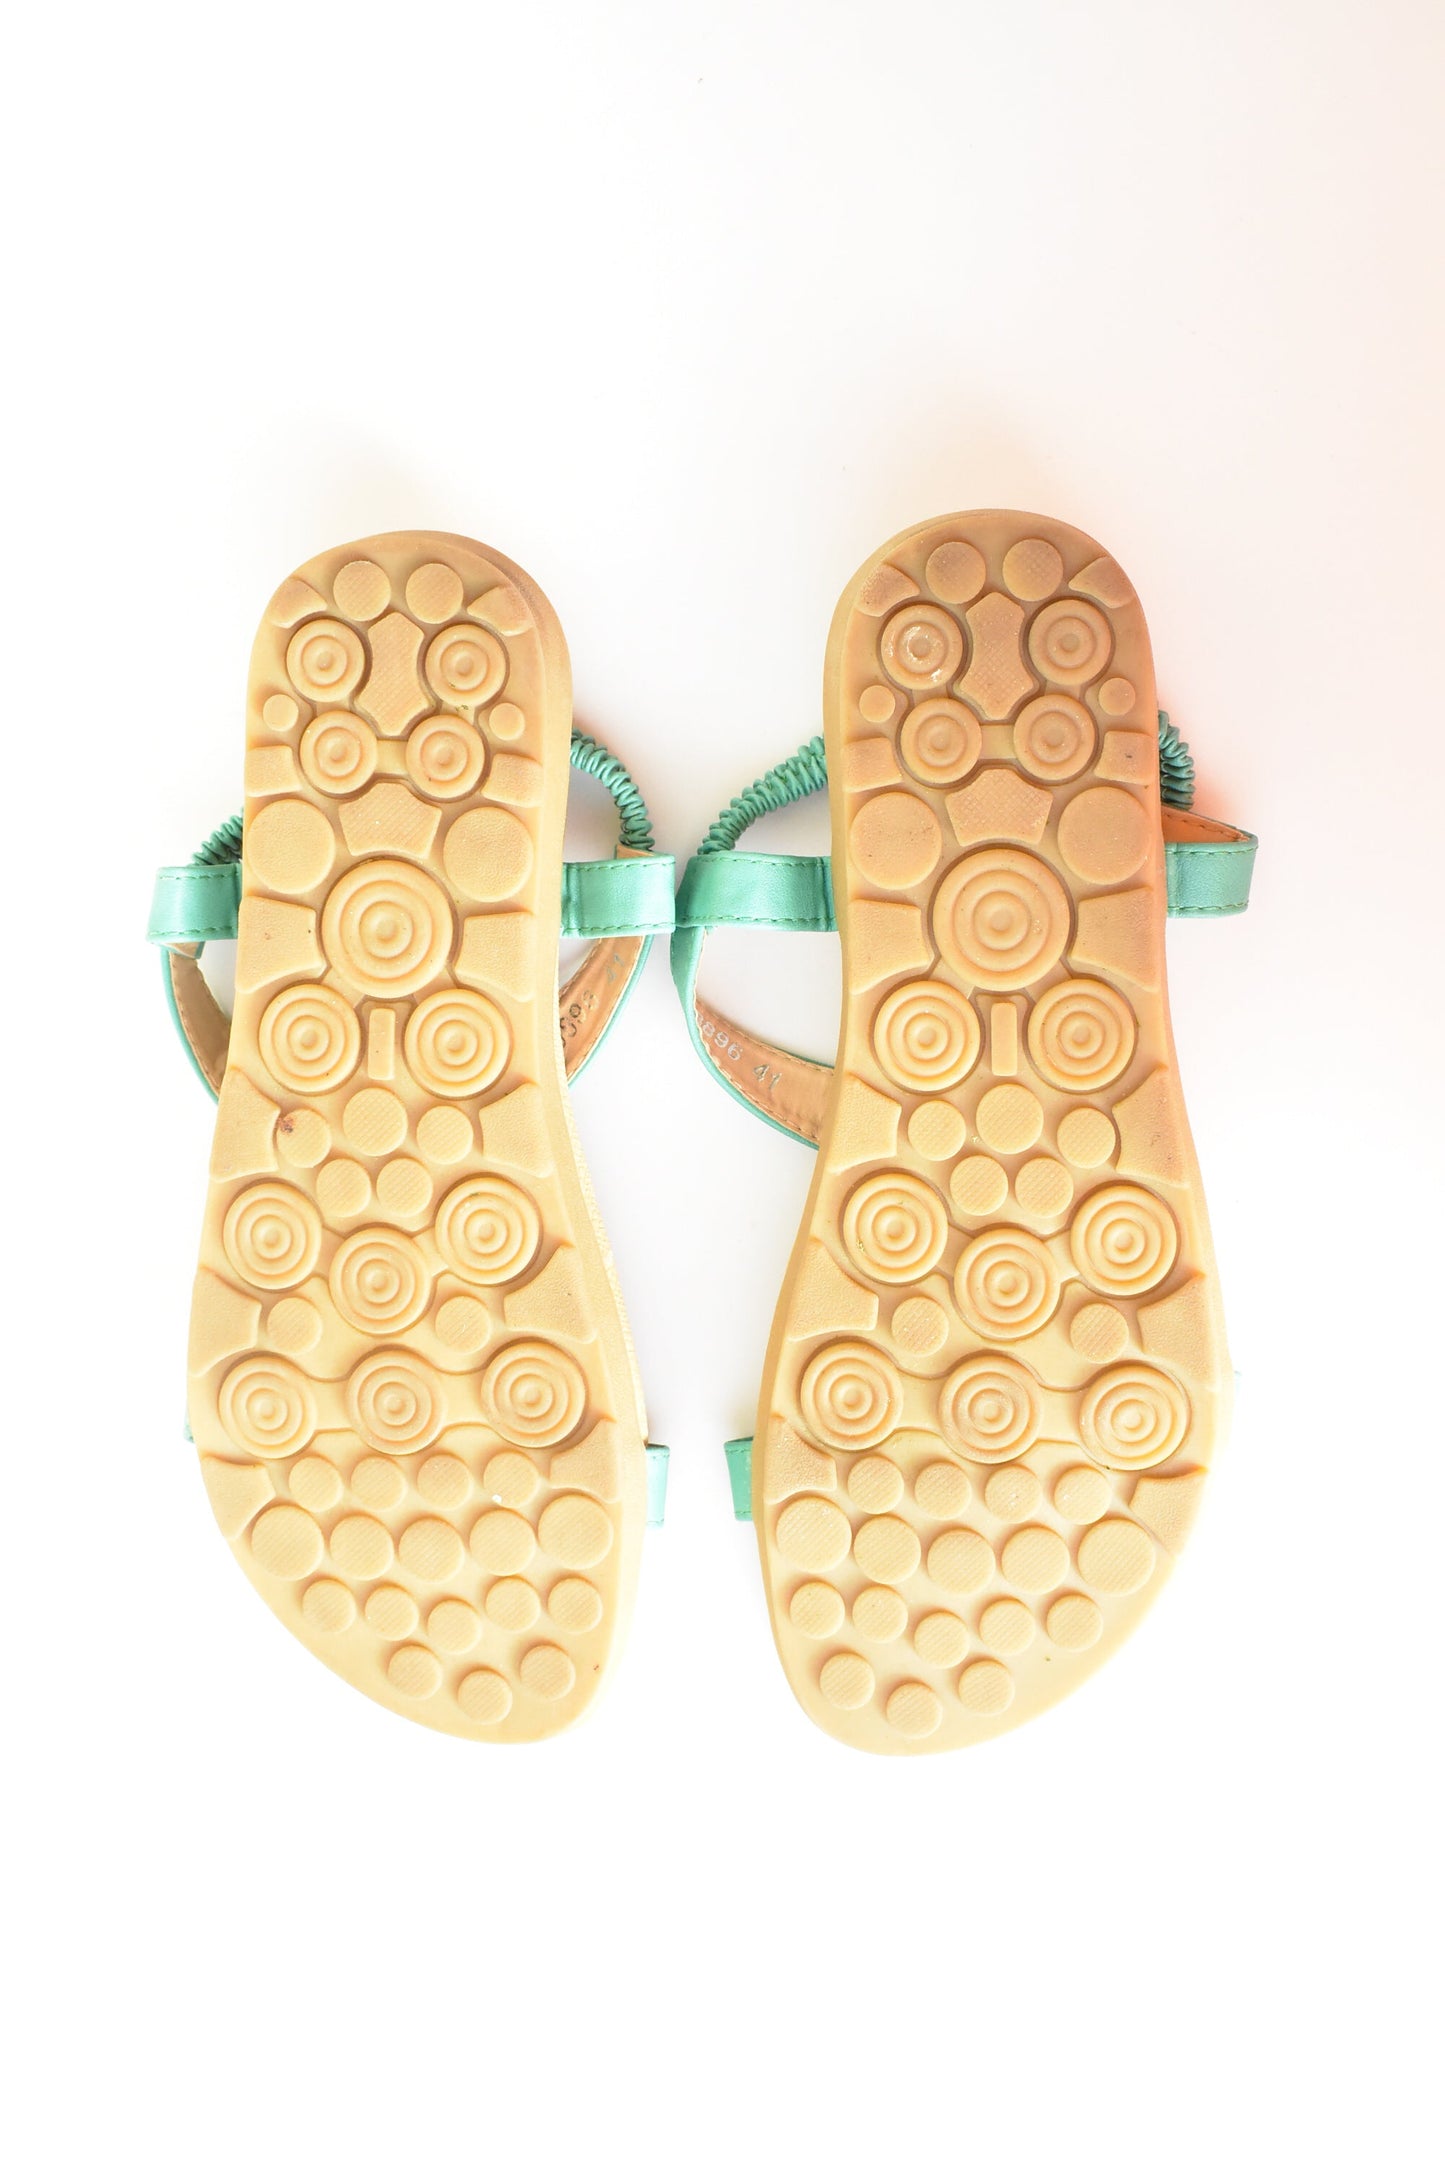 Mint sparkly leaf sandals, size 8